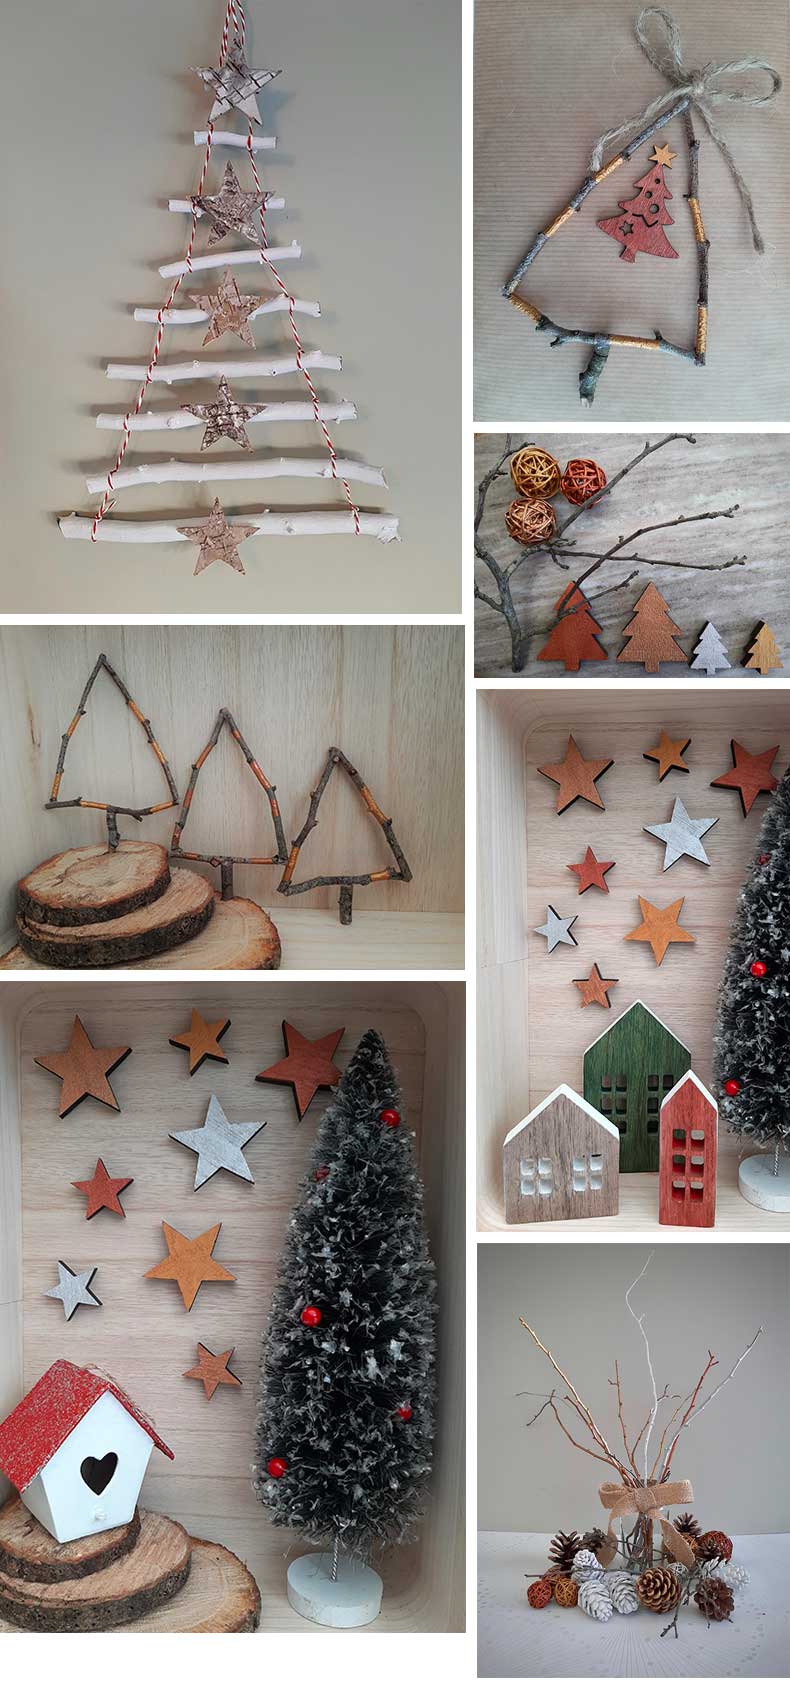 Rustic Christmas Decorations